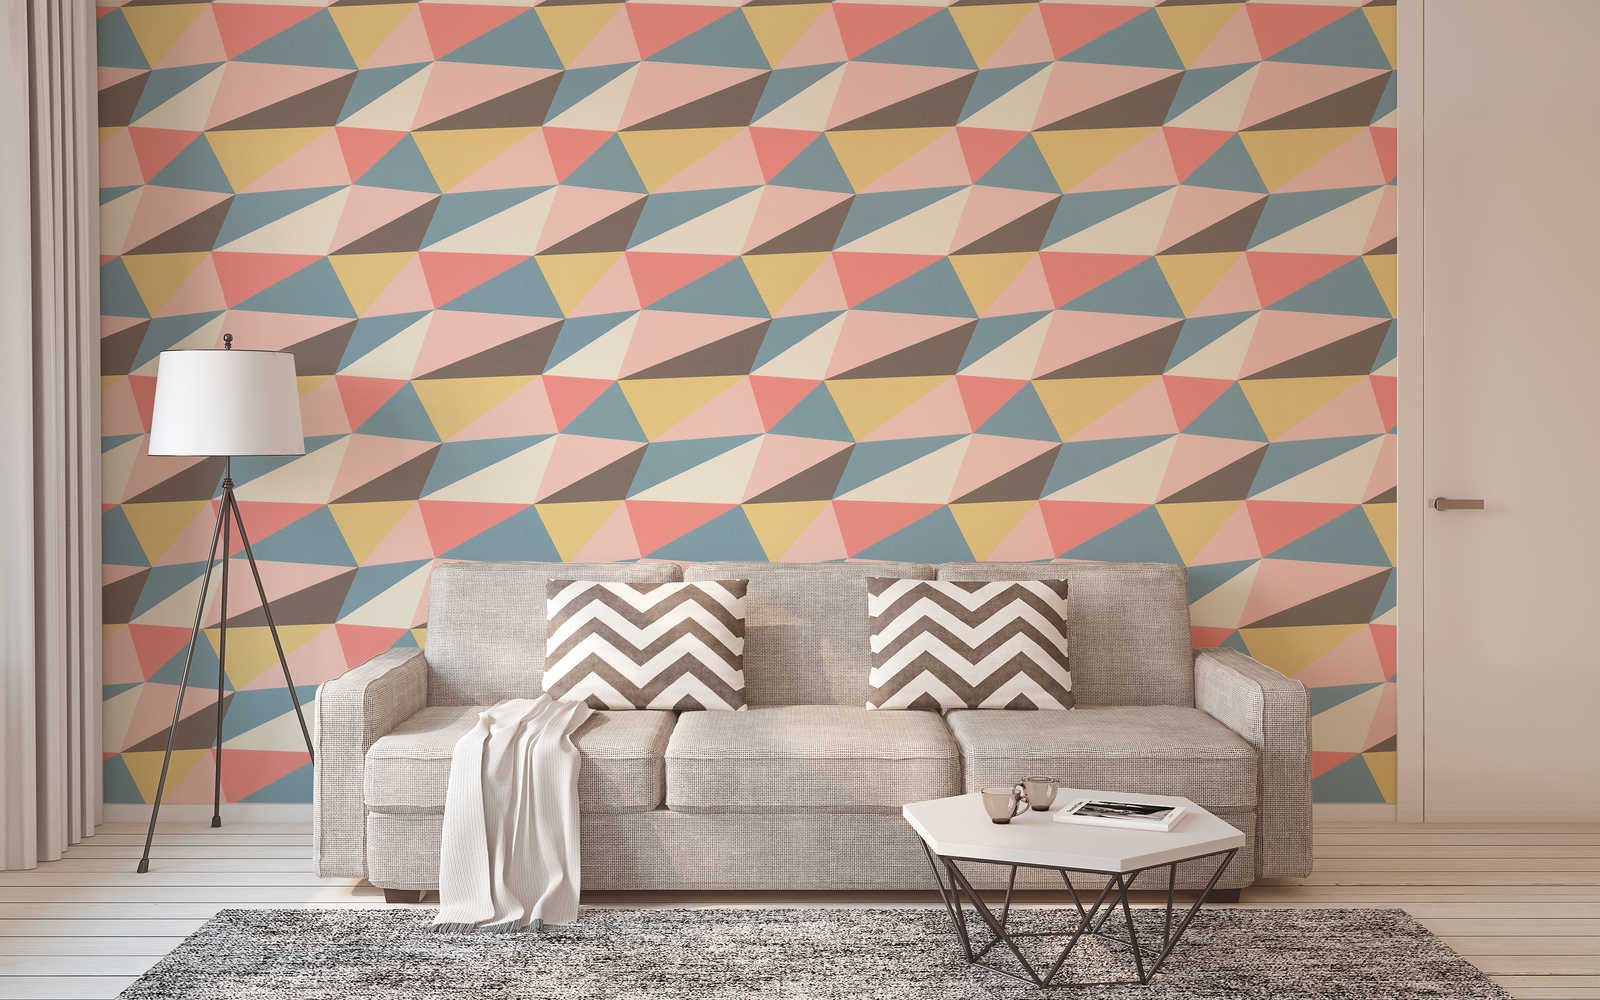             Non-woven wallpaper with colour block design - blue, yellow, pink
        